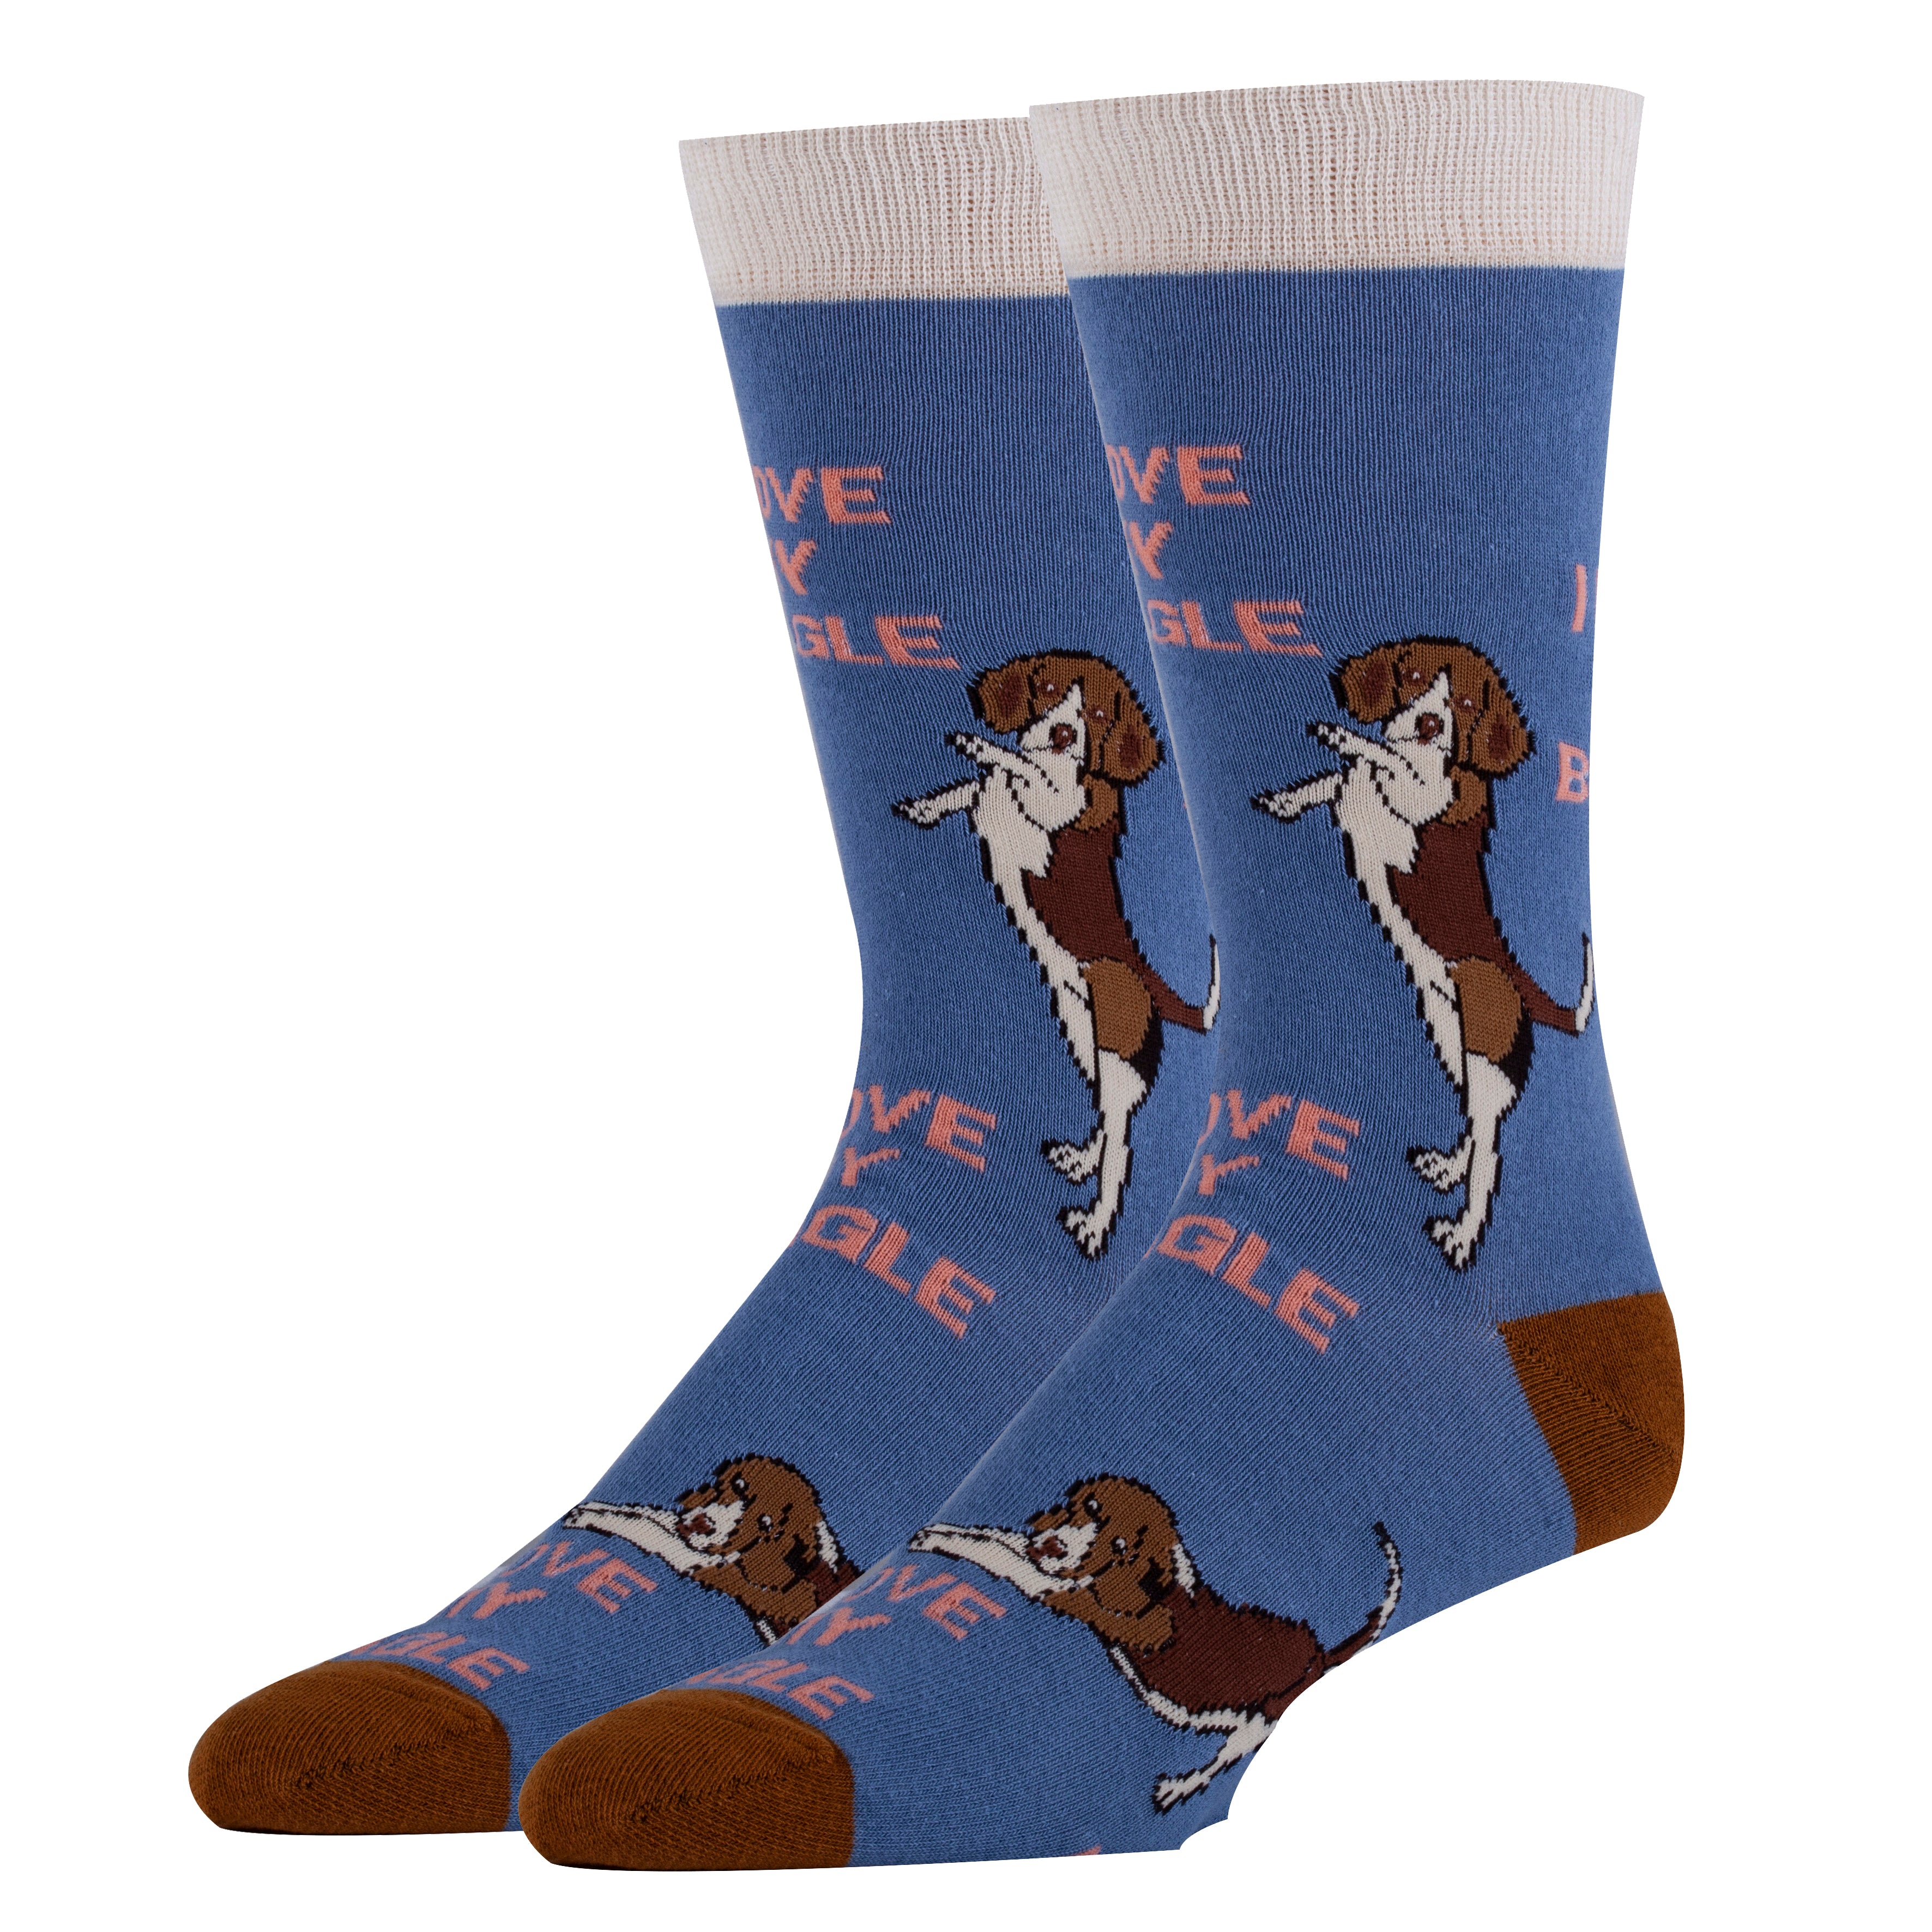 Bring Me My Wiener Dog Dachshund Socks - Sock Doggo - Ladies and